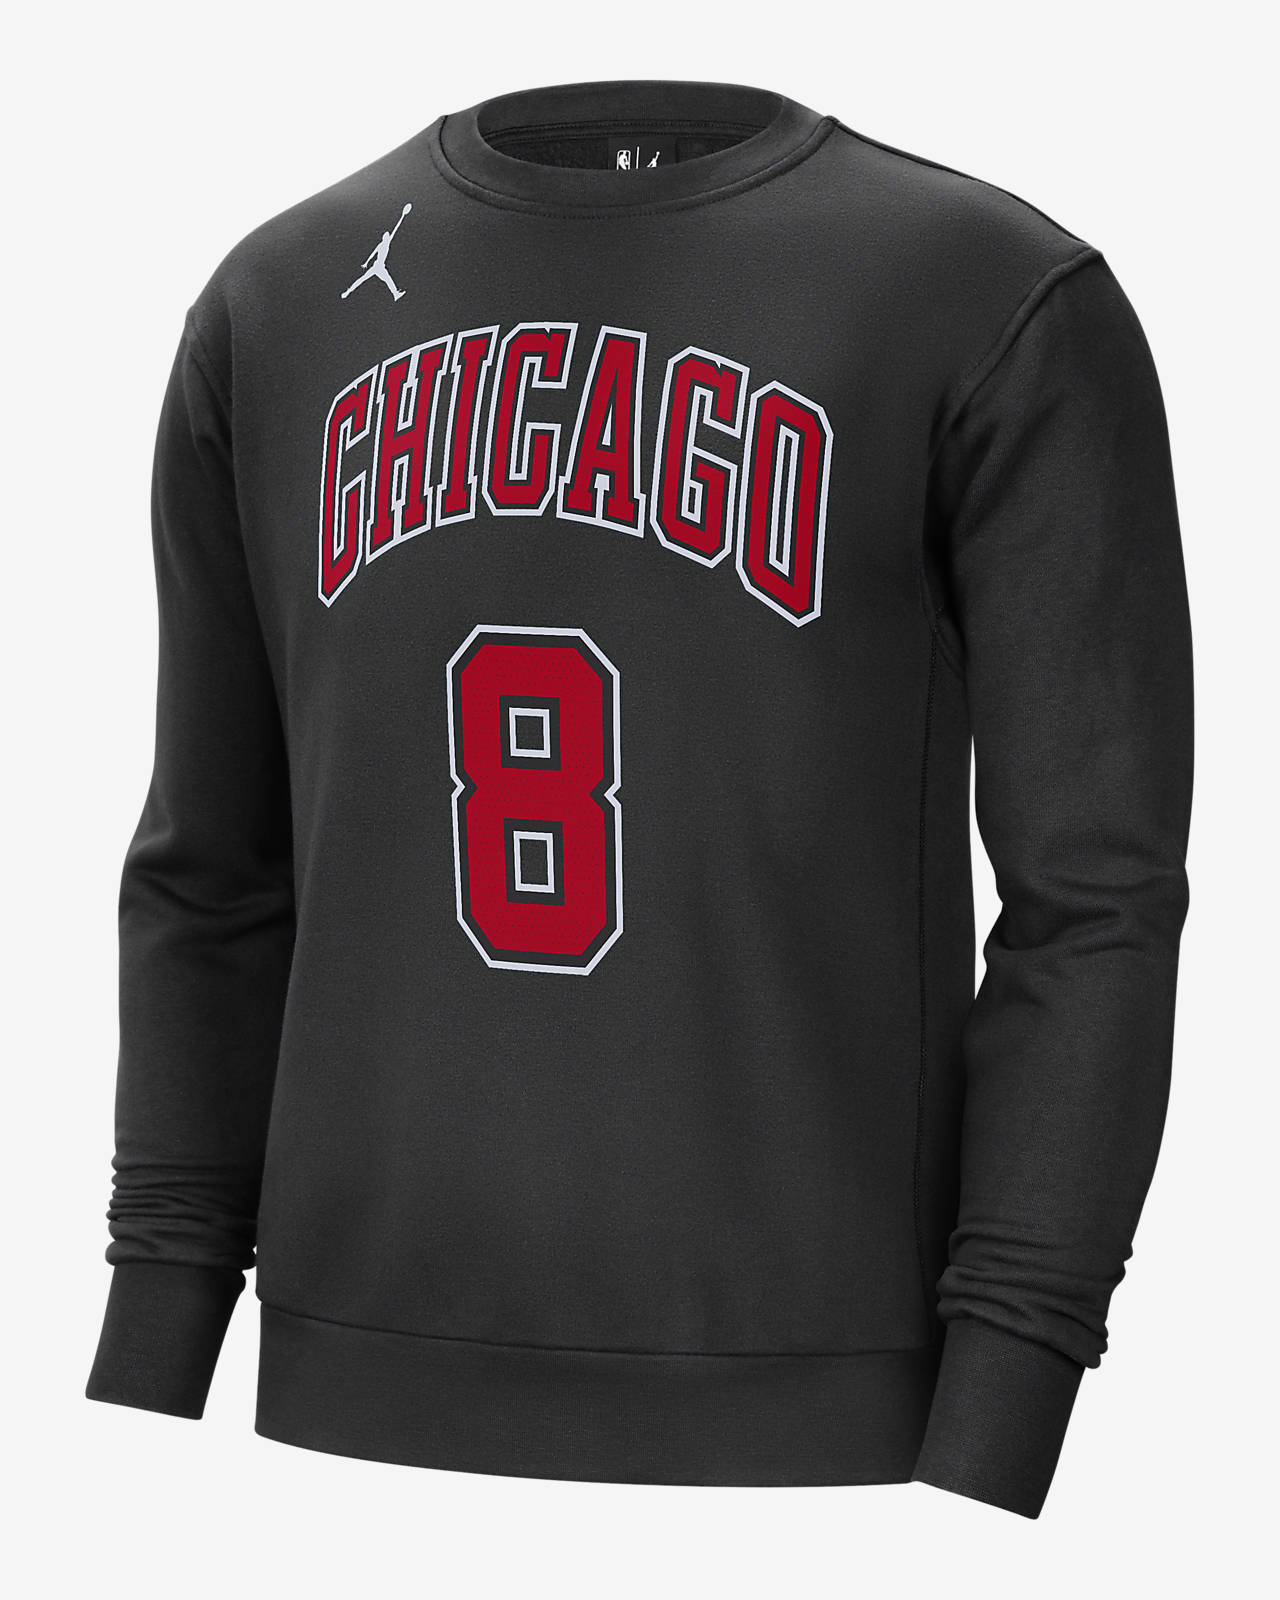 Chicago Bulls Nike Courtside Tracksuit - Womens